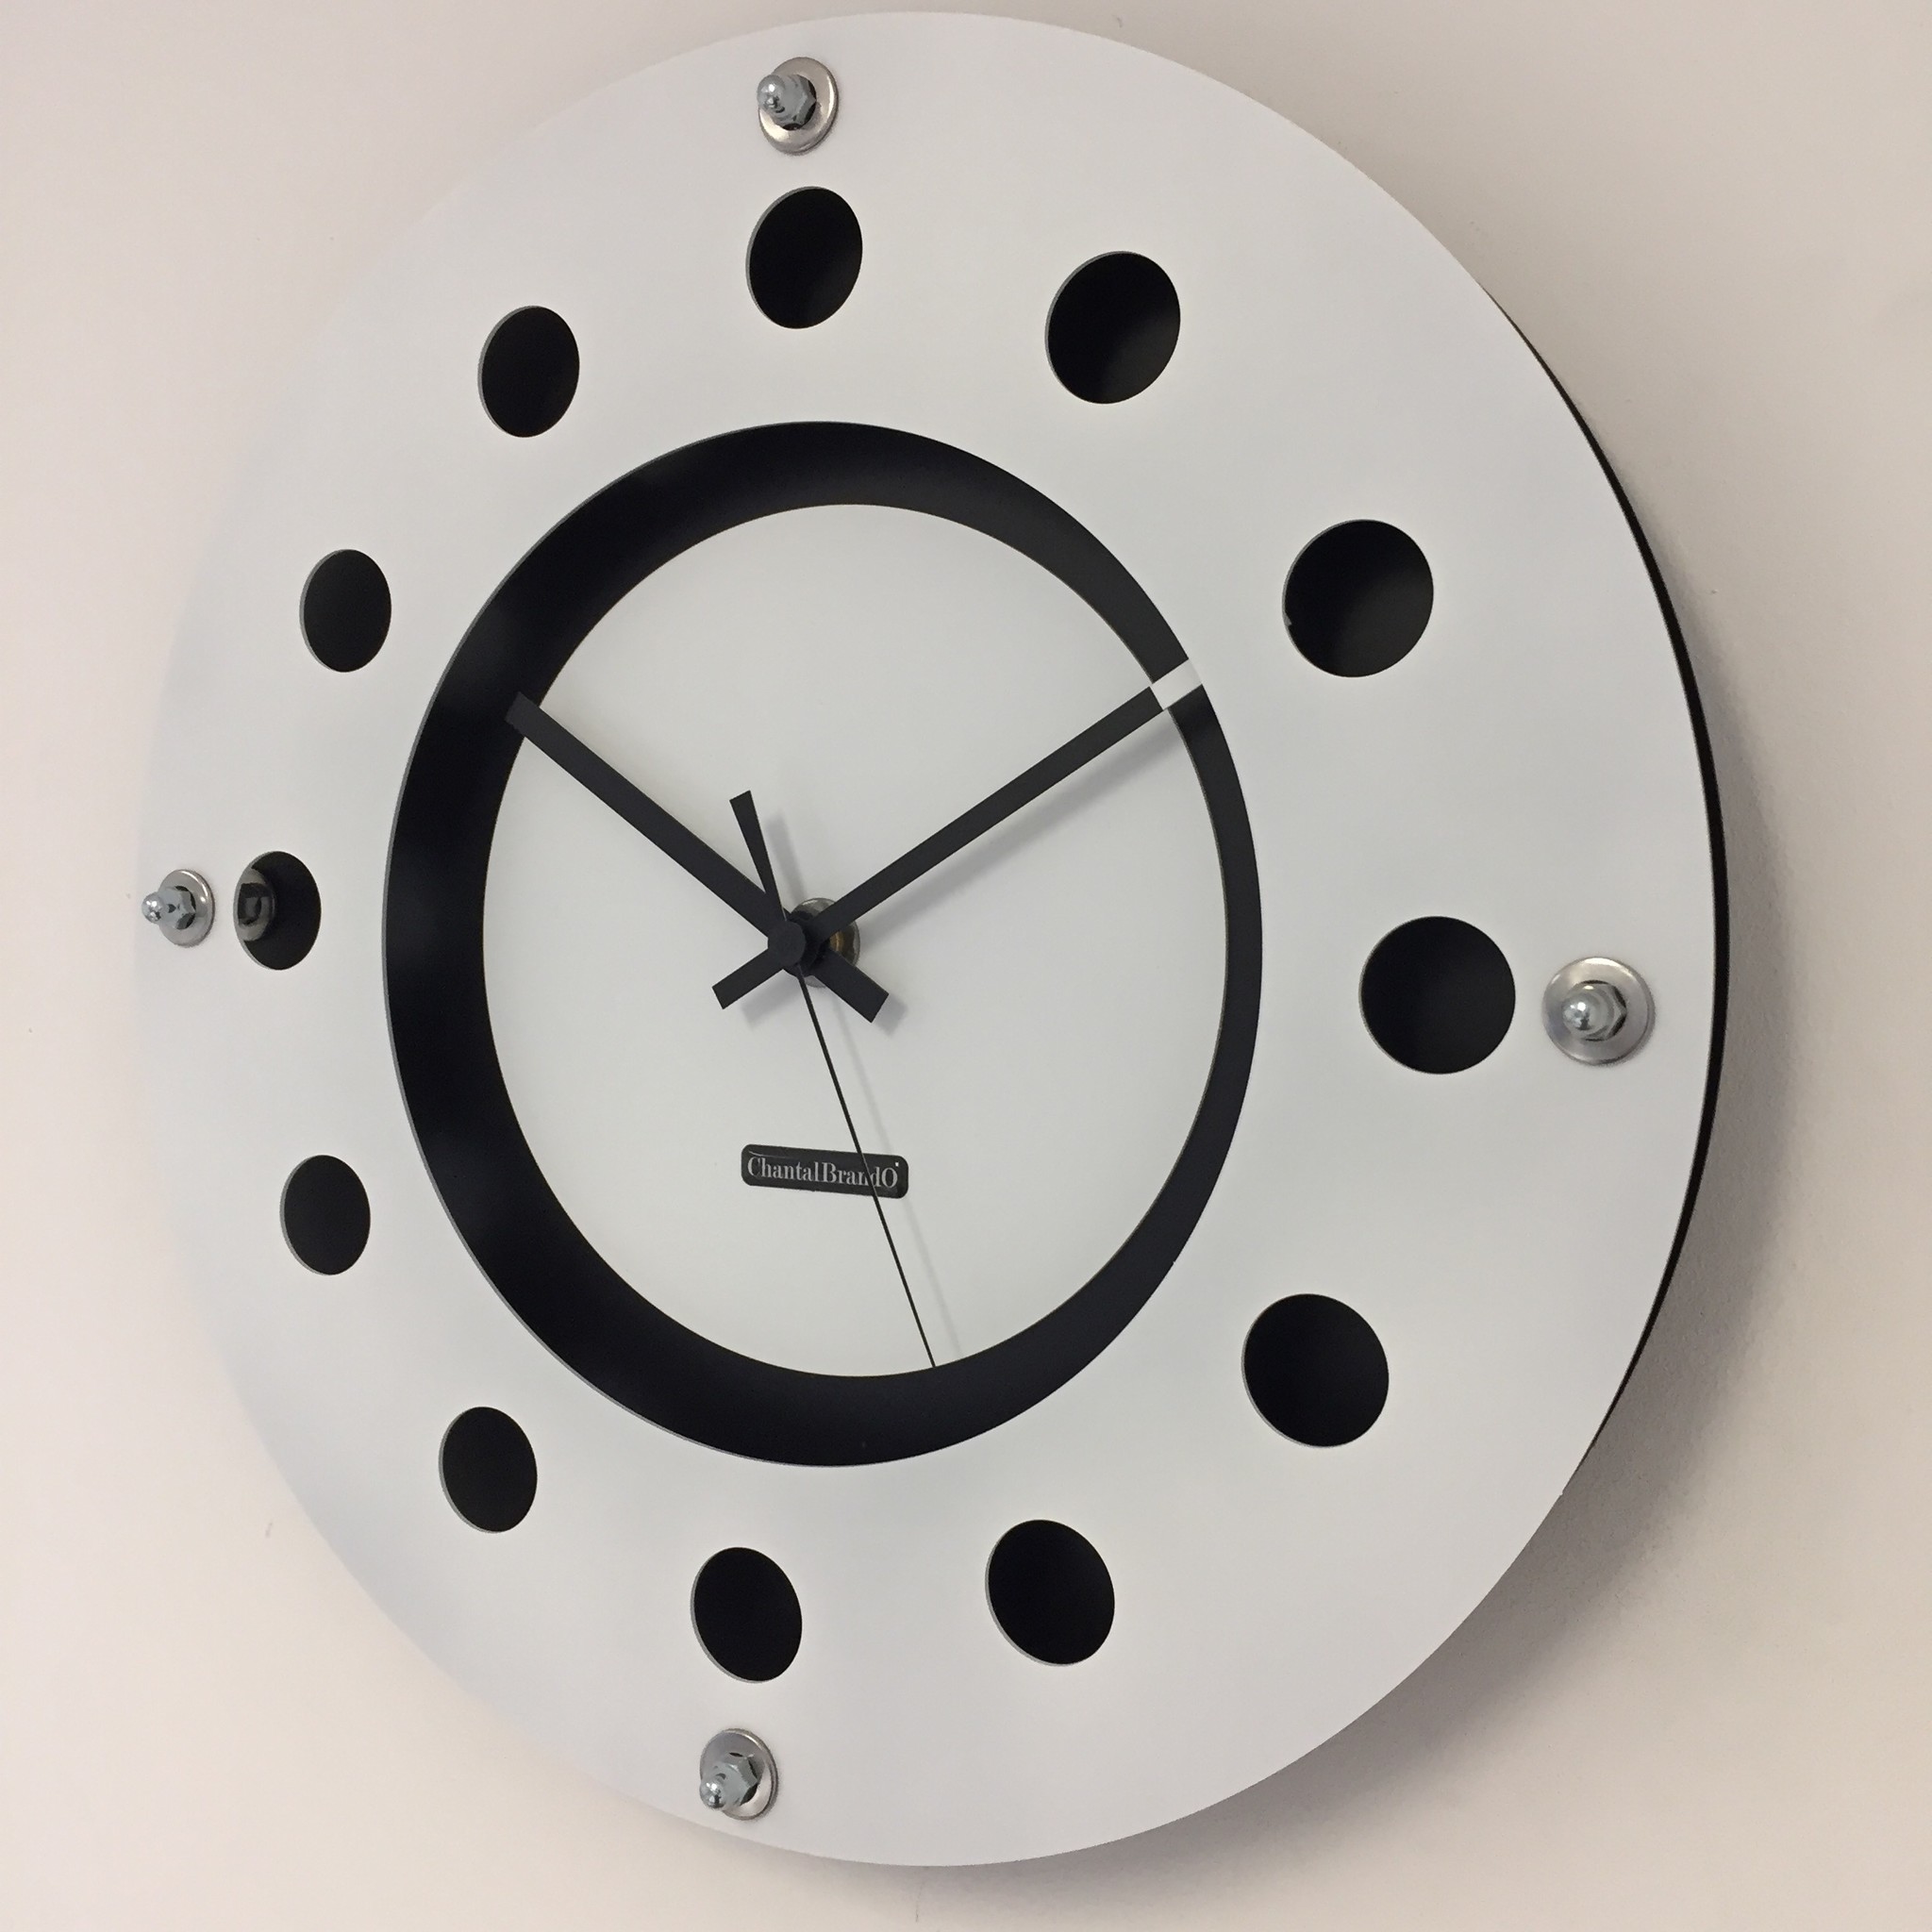 ChantalBrandO Design - Wall clock White Flens Mecanica Completely Black With White Small Inside Circle Black Pointer Modern Dutch Design Handmade 40 cm